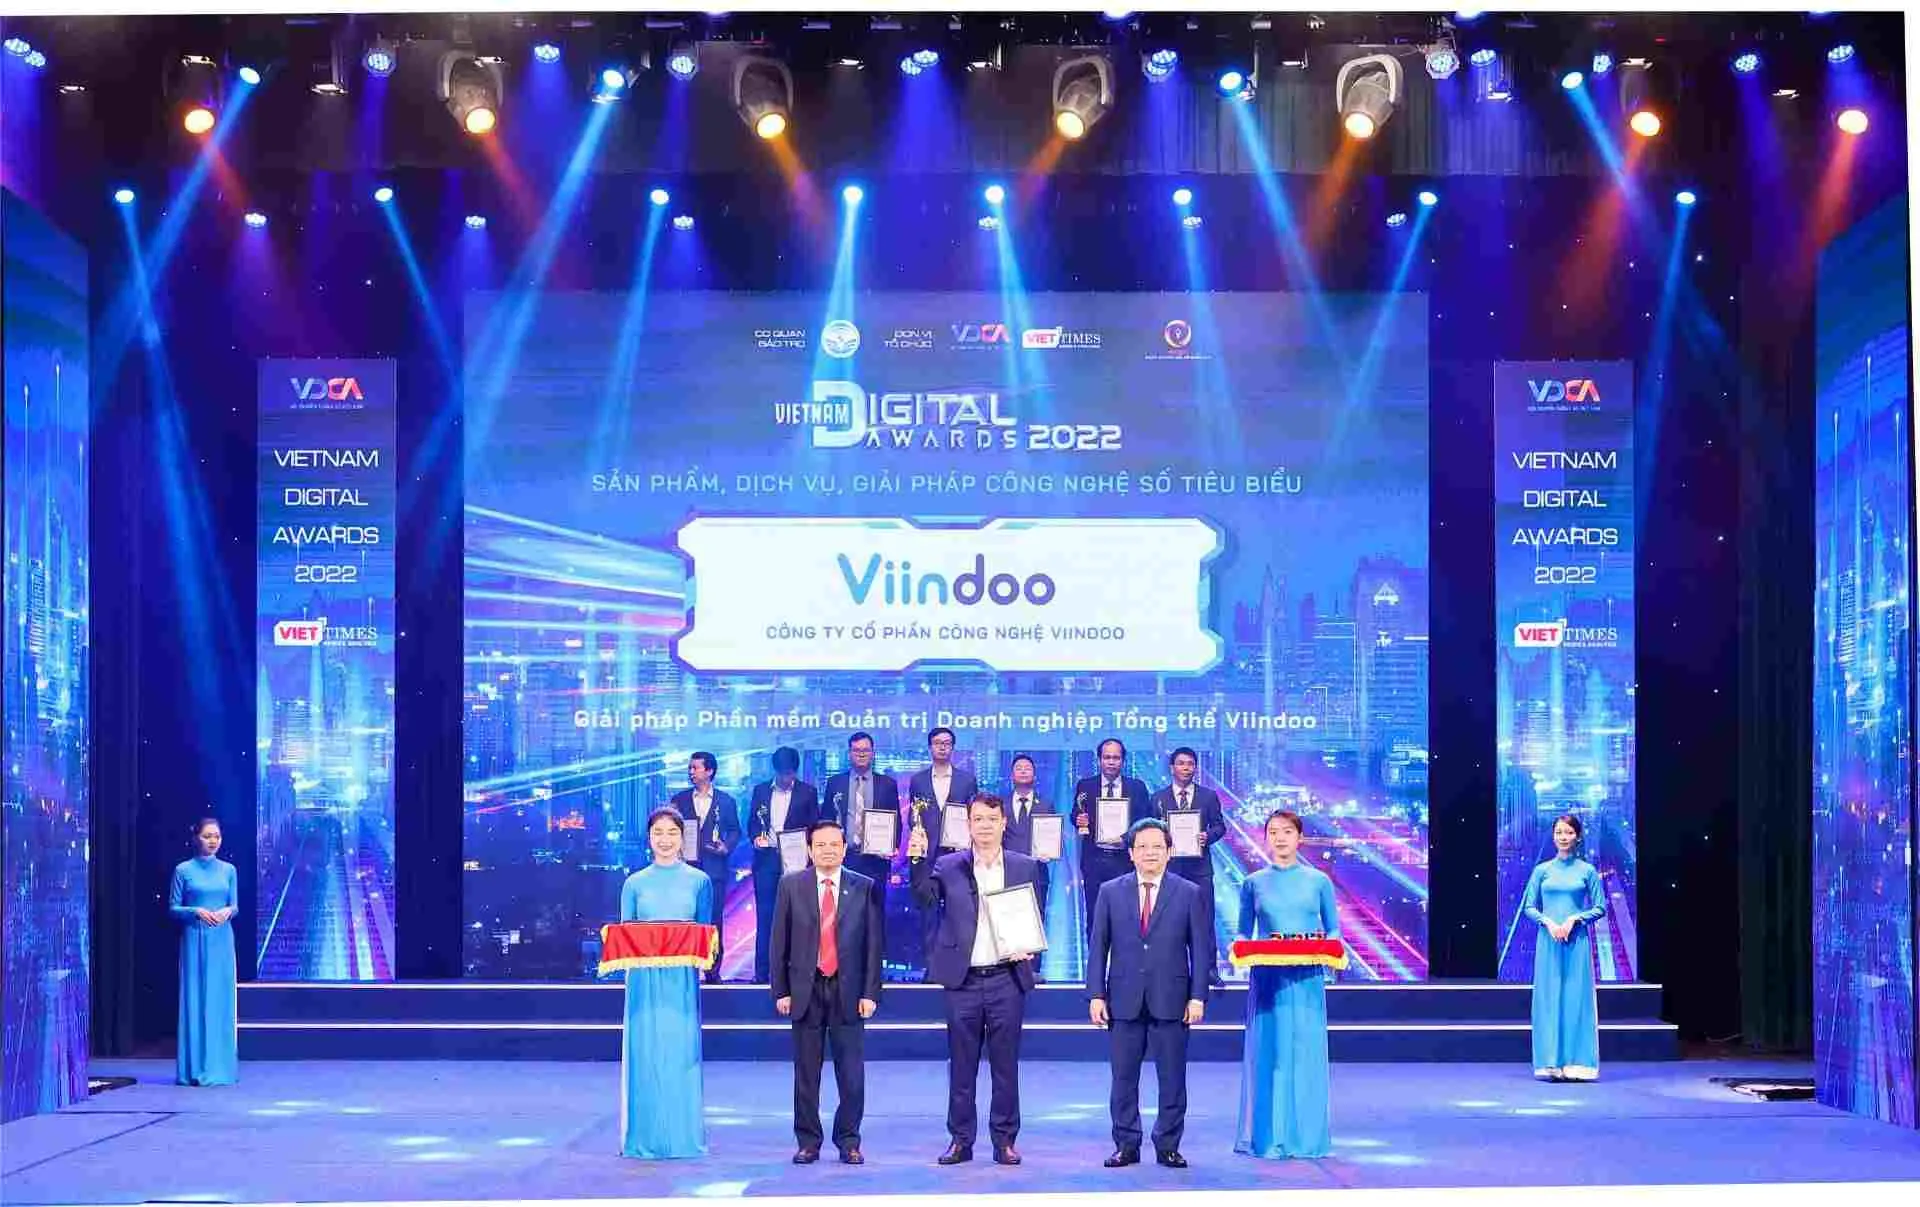 Viindoo's representative at Vietnam Digital Awards